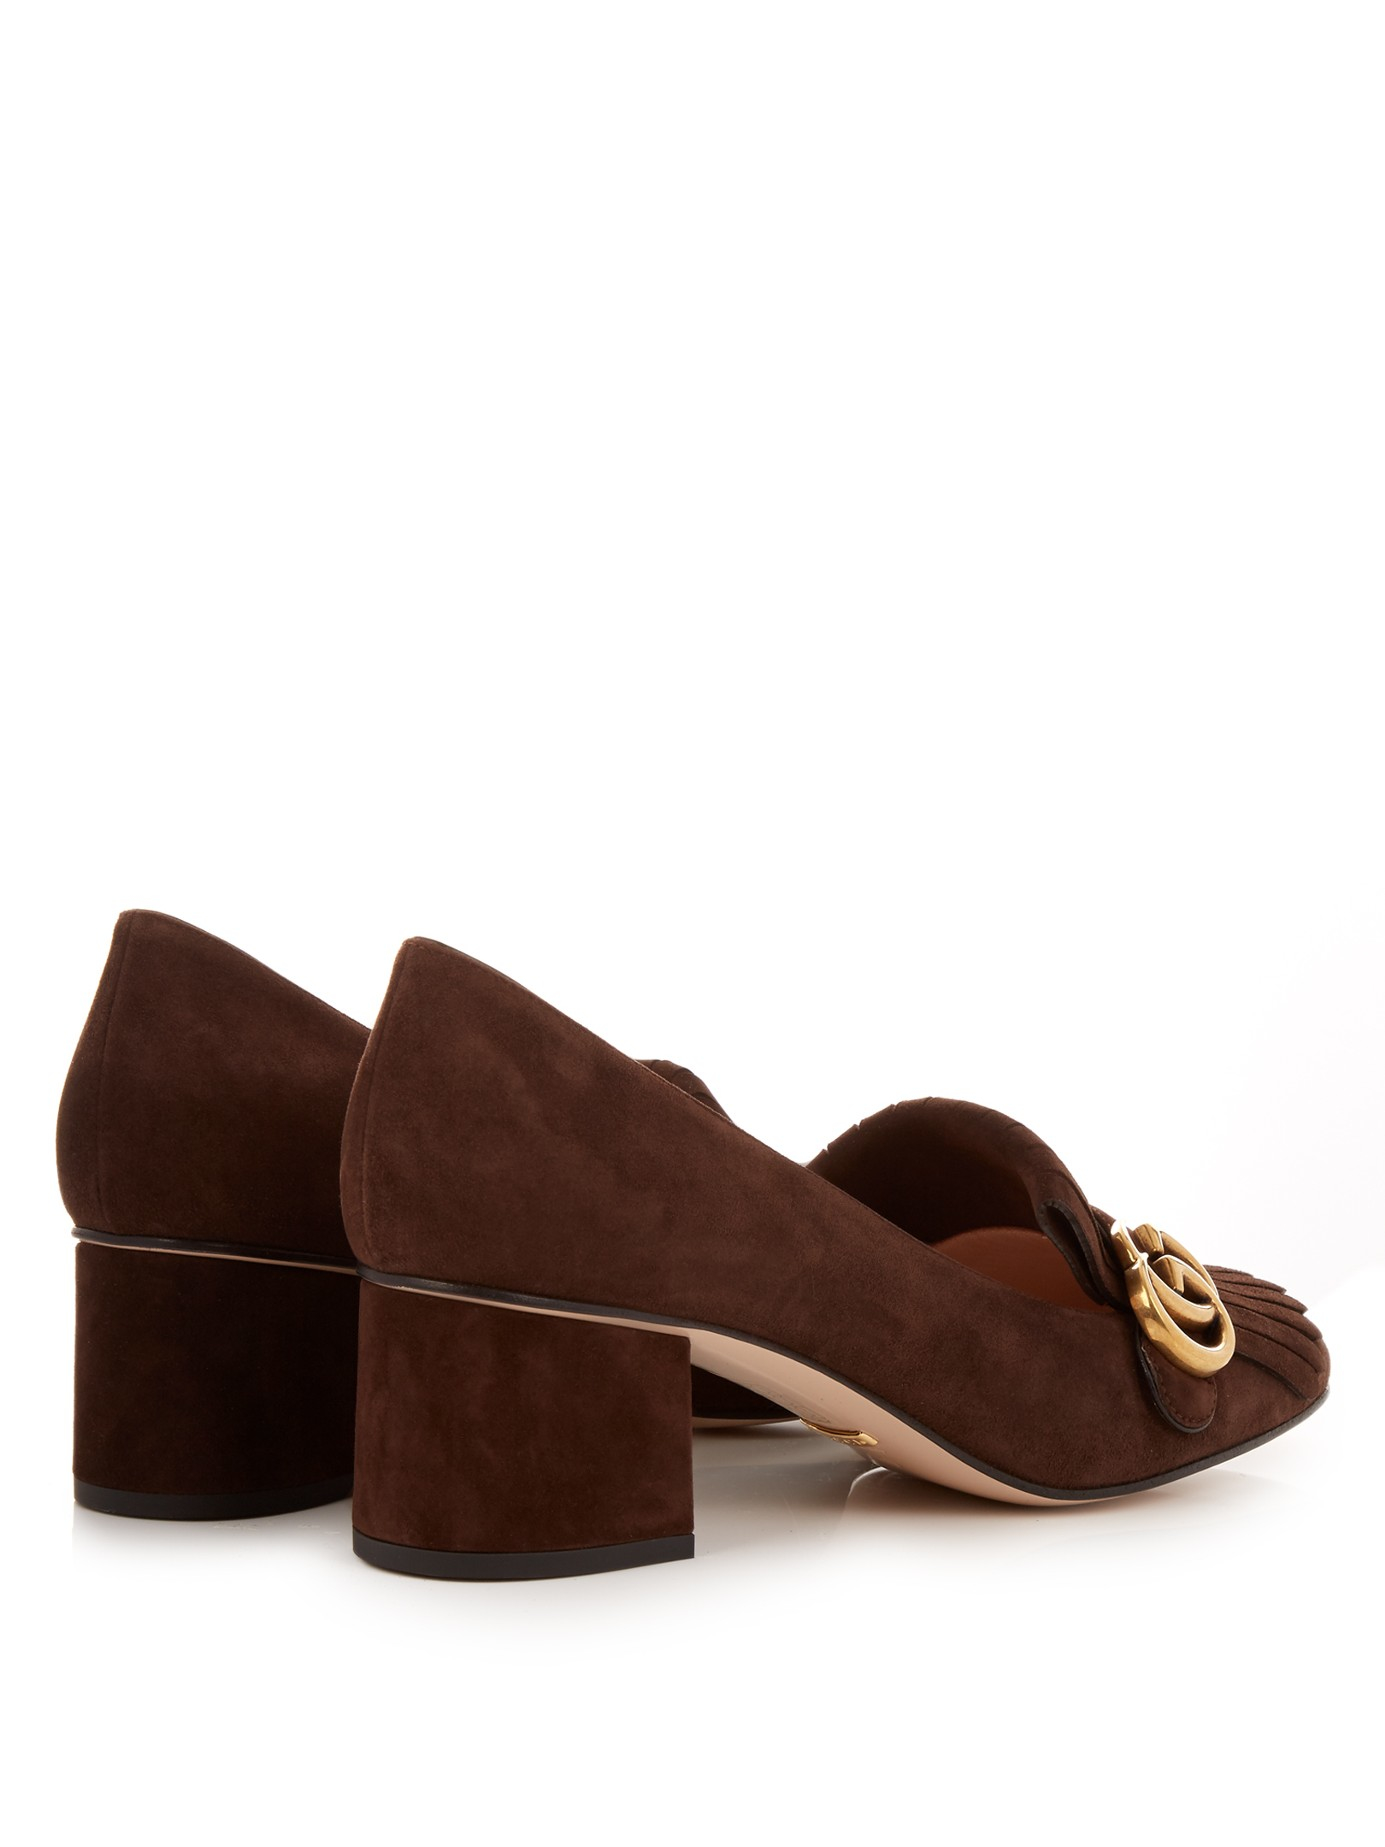 Suede Loafers in Dark Brown (Brown) - Lyst